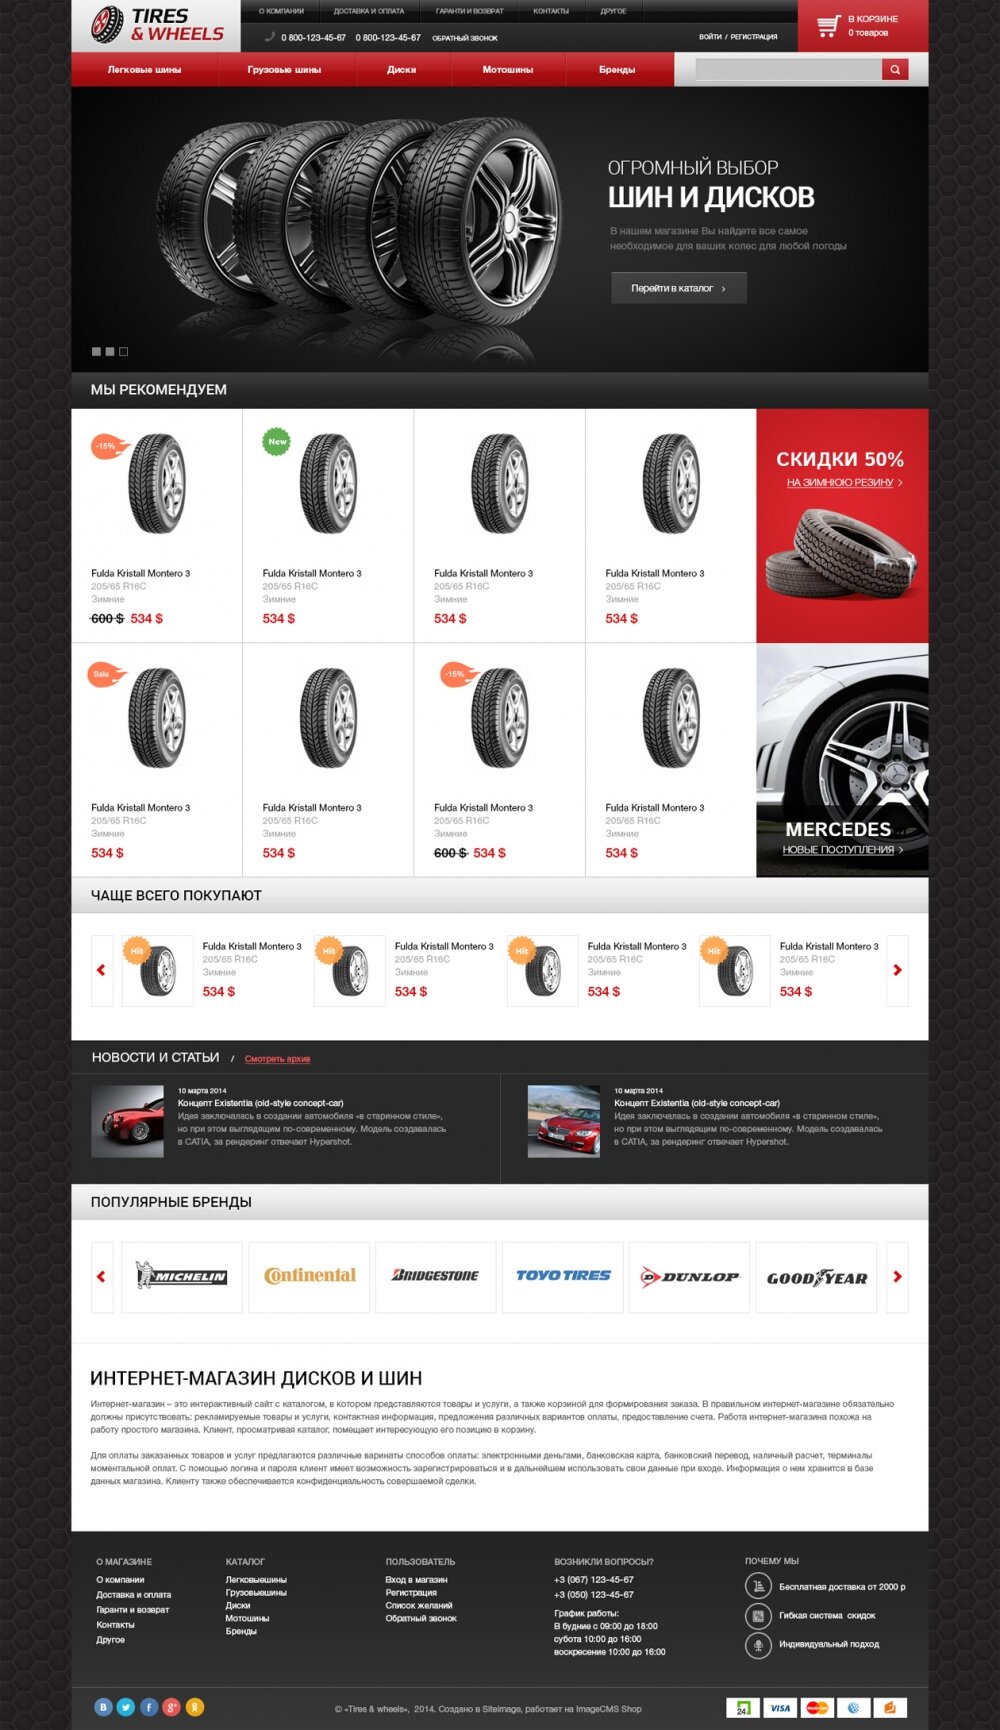 Tires&Wheels